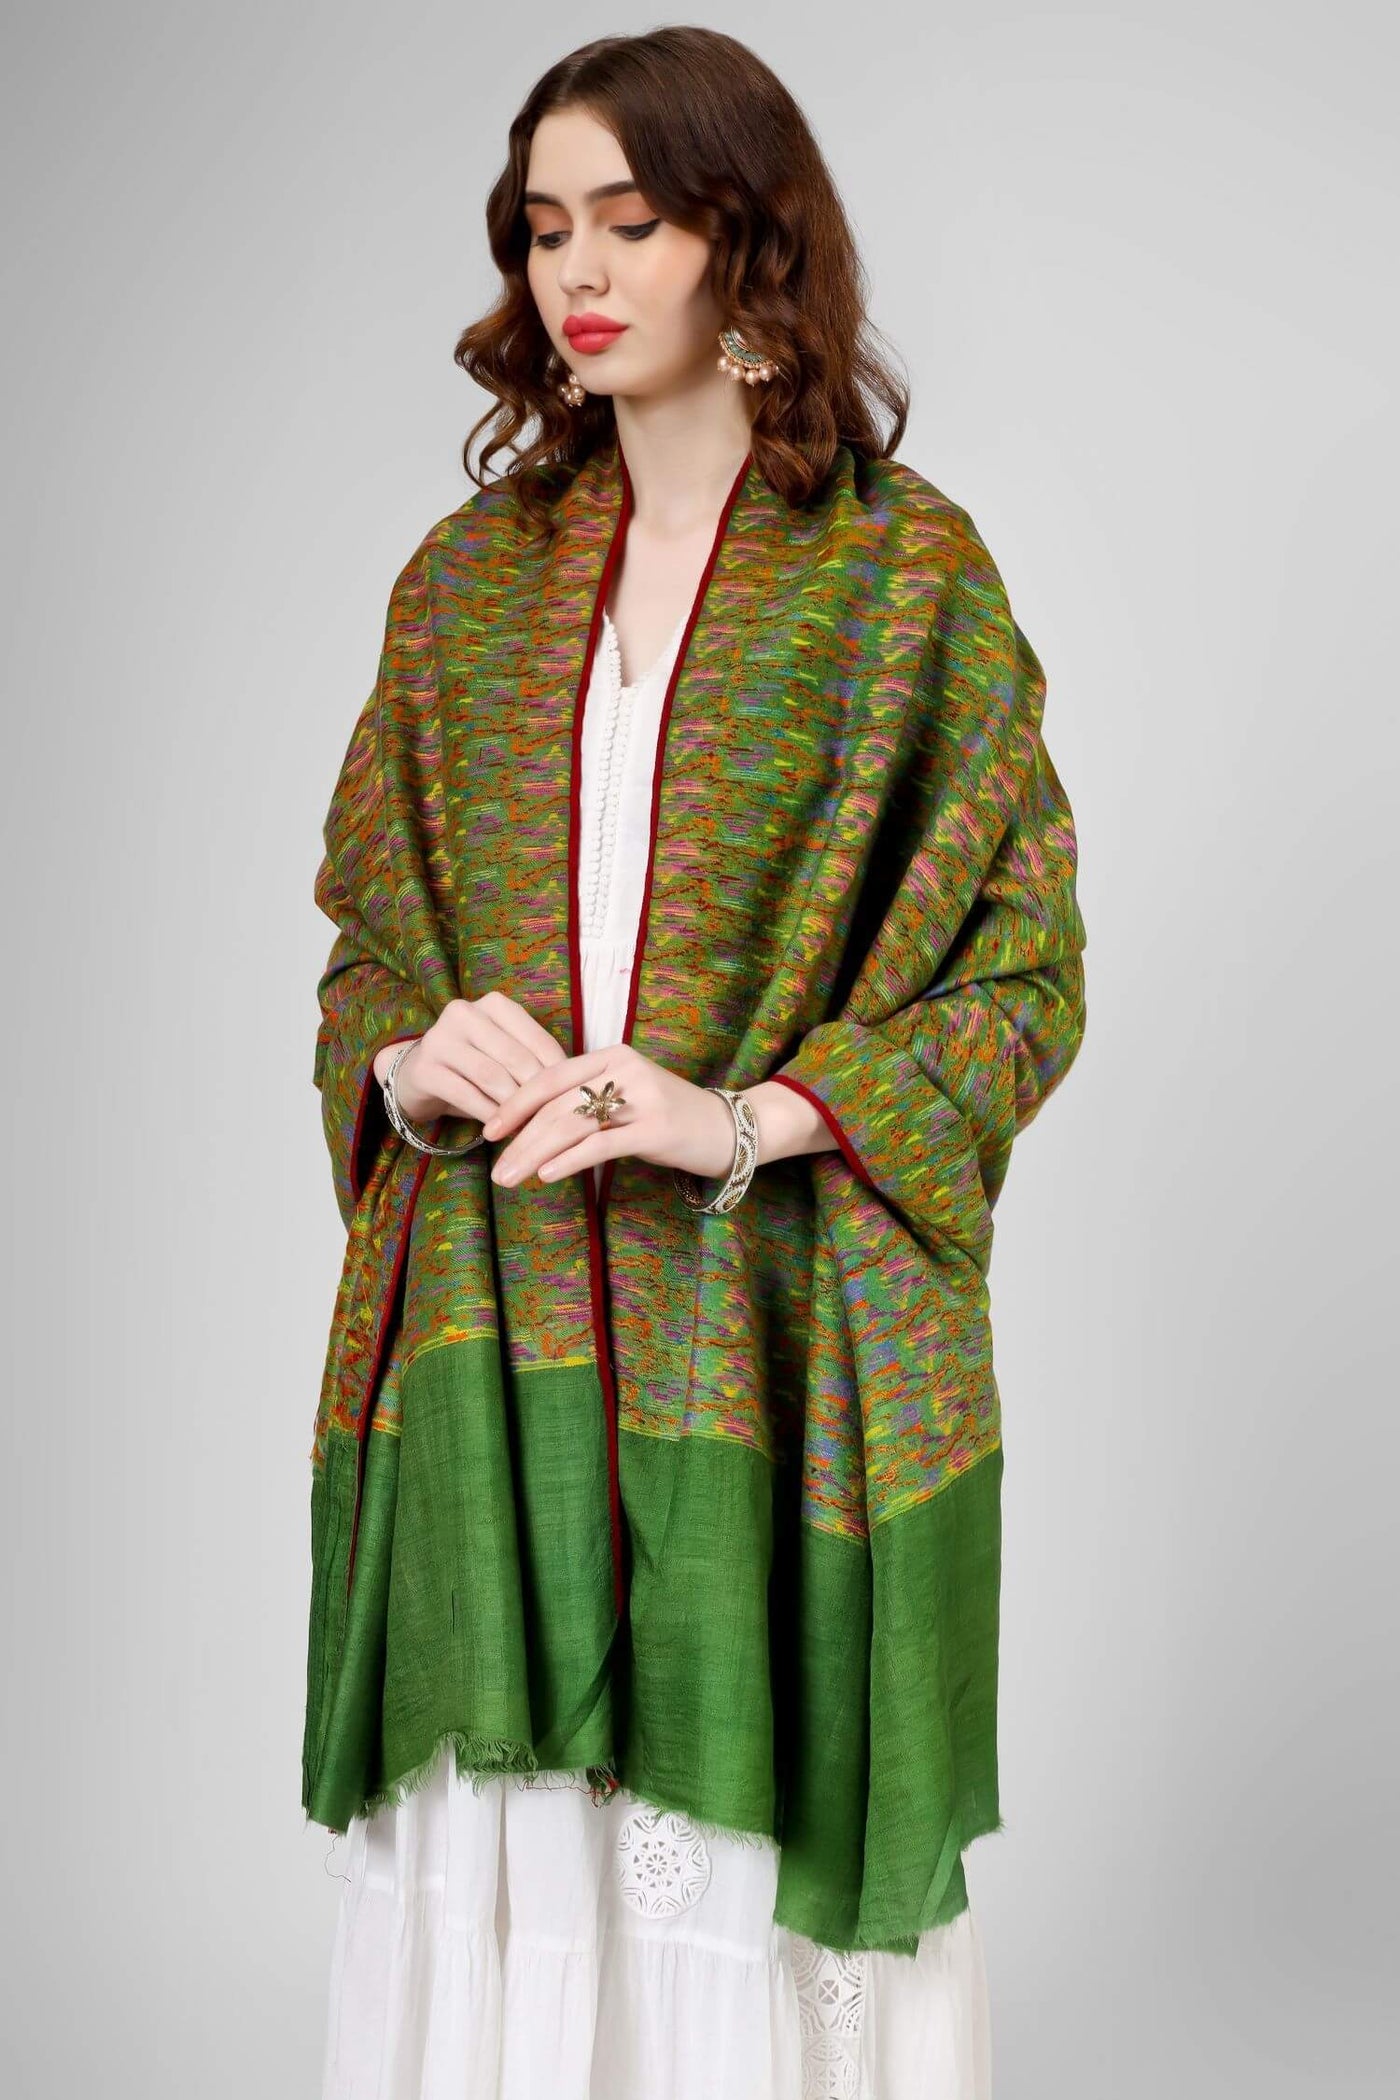 "Green Pashmina Kashmir Antique Shawl" – a classic fusion of lush green hues and timeless Kashmiri craftsmanship